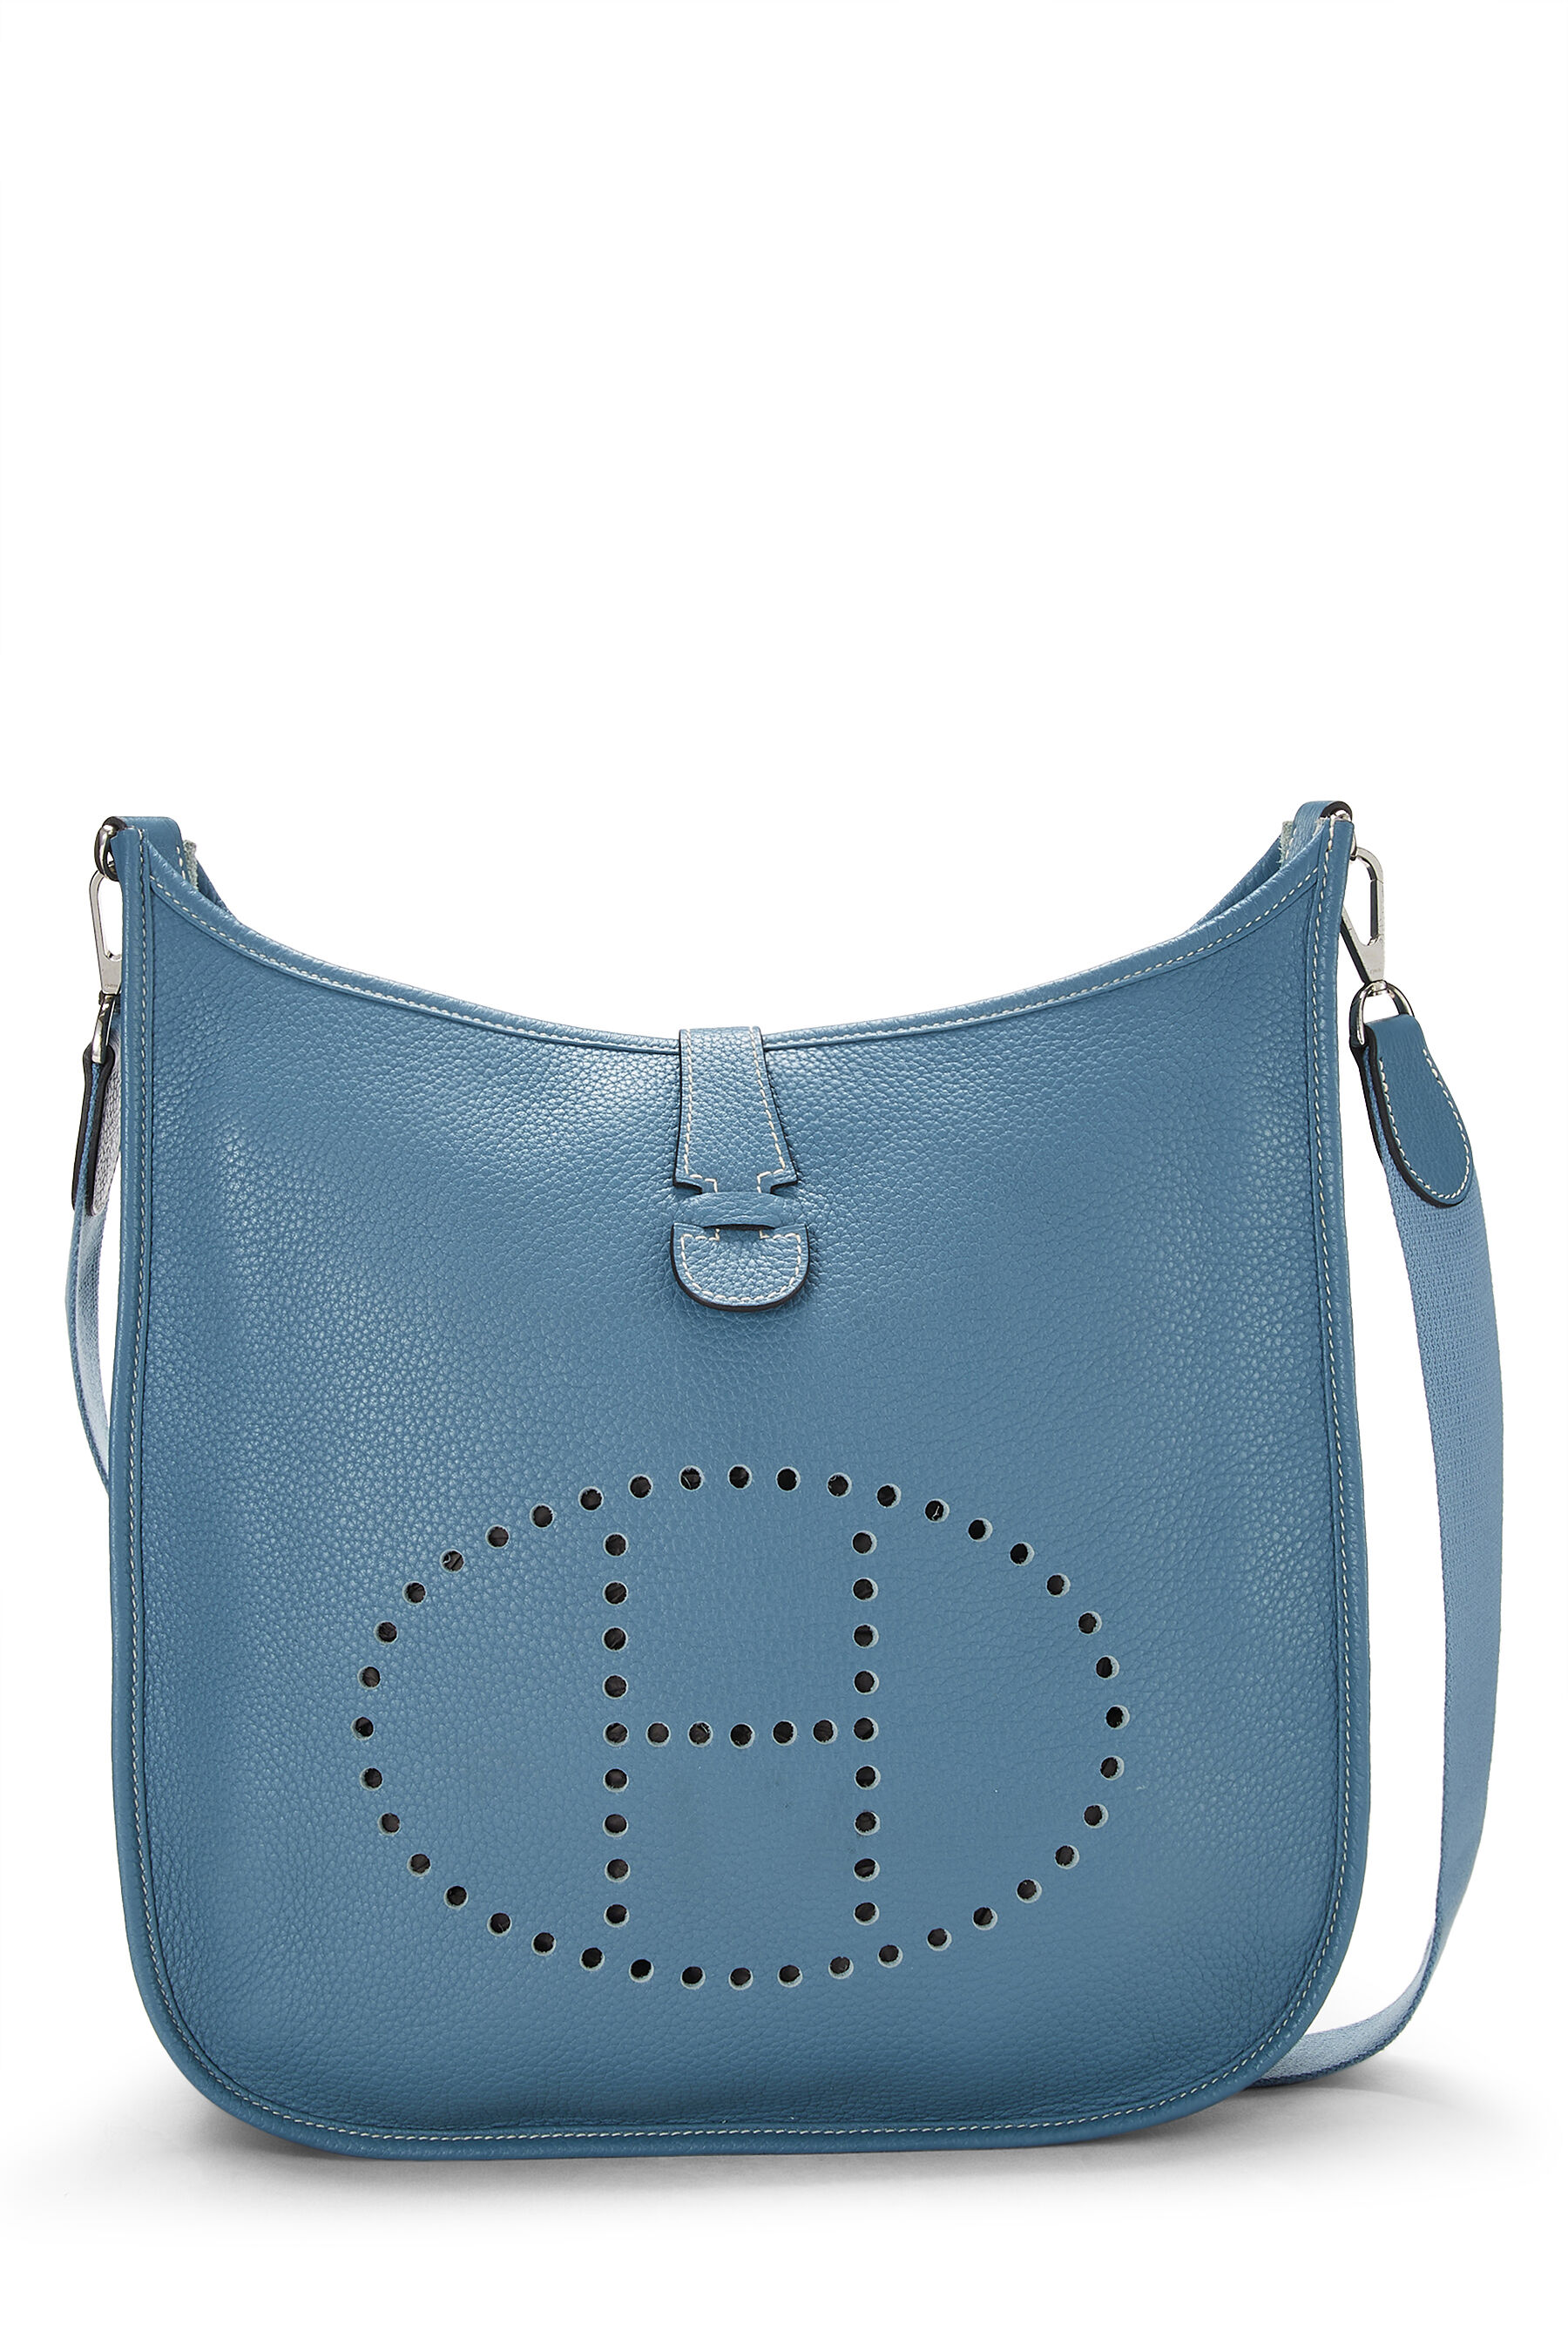 Hermès Ciel Blue Evelyne III 33 Bag - Hermès